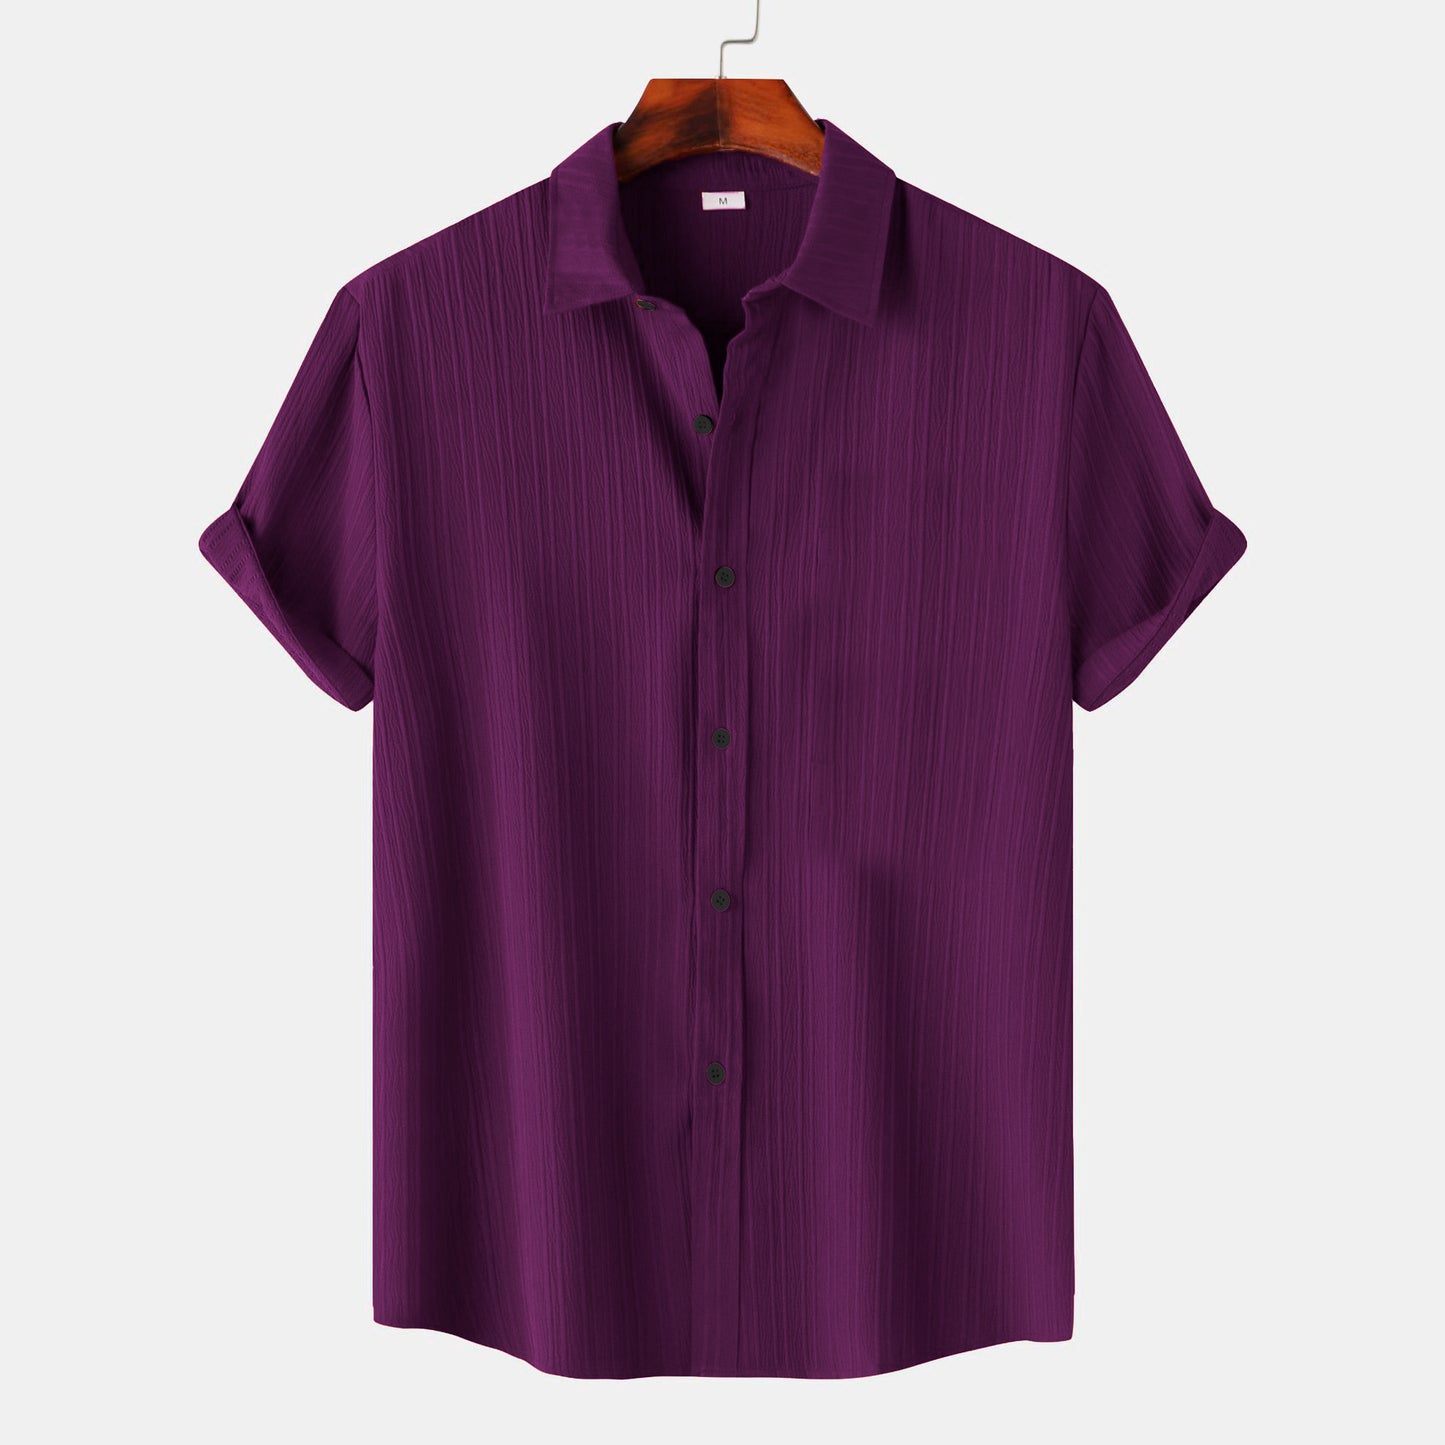 Man's Premium Dark Purple Shirt Collections